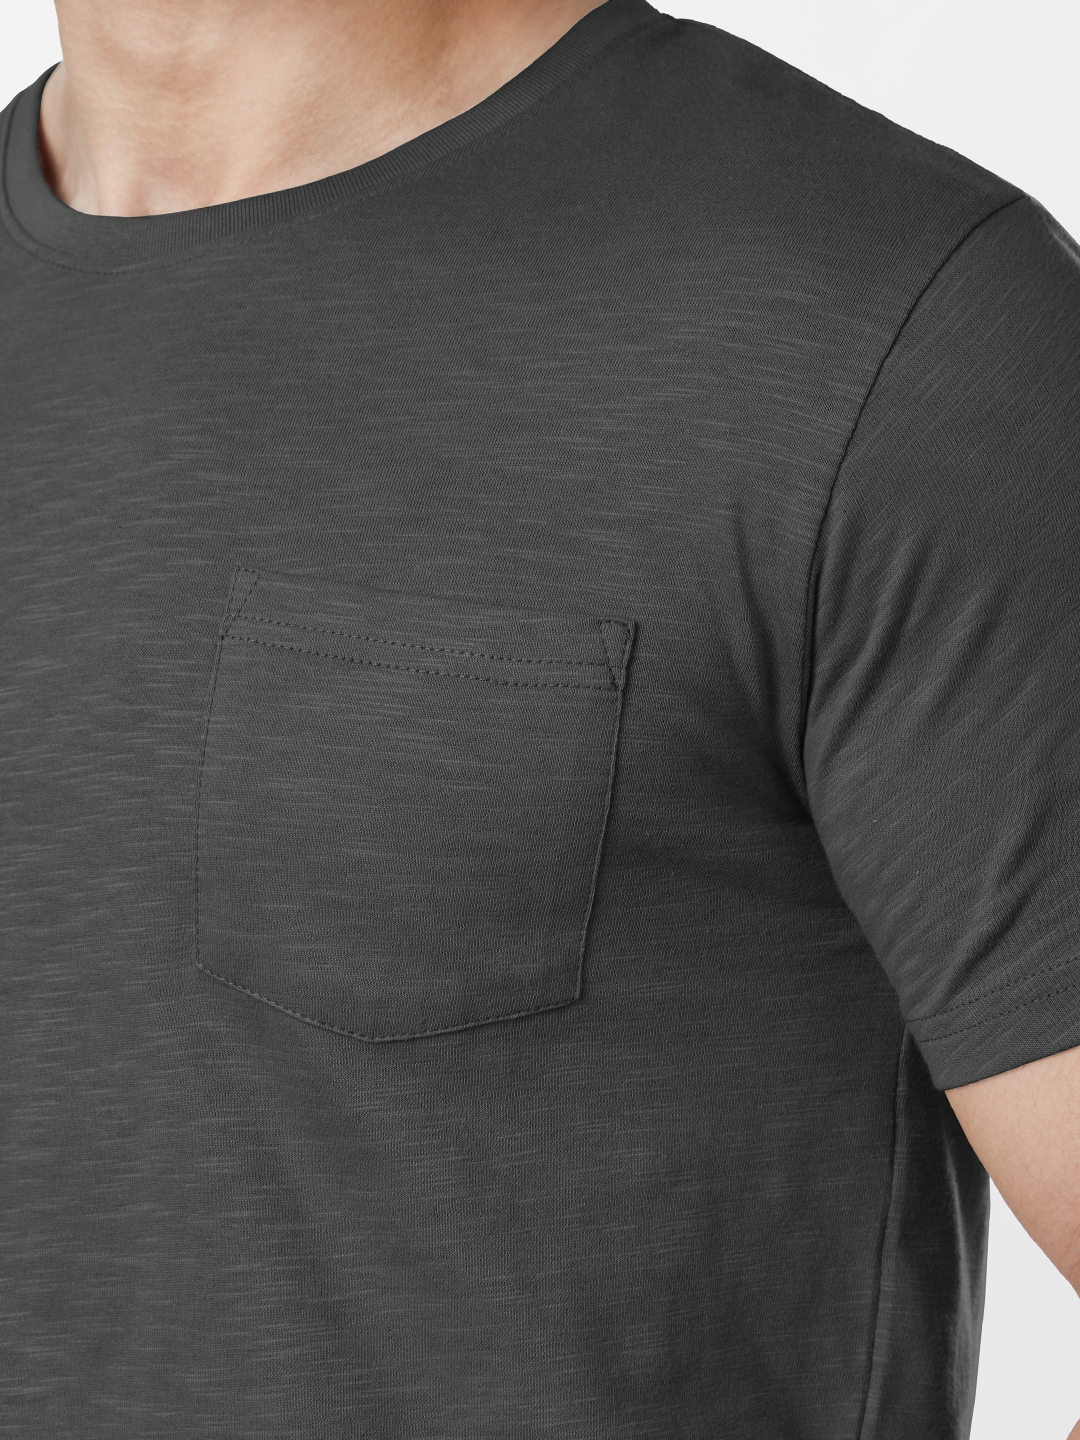 The Souled Store | Men's Solids Slub: Steel Grey T-Shirt